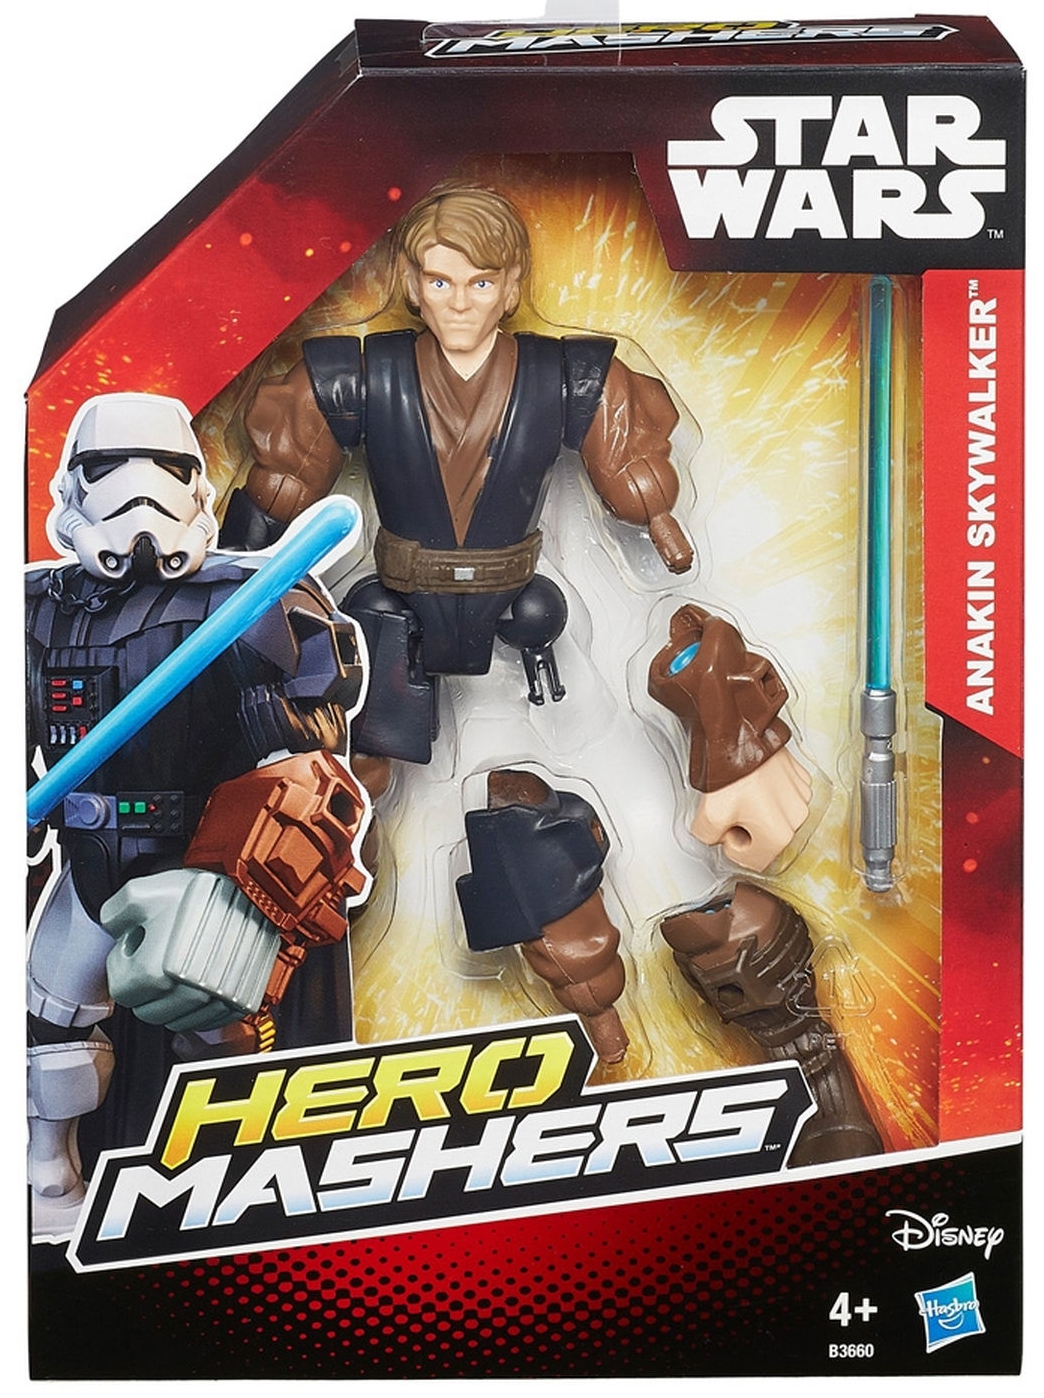 Disney Star Wars 'Anakin Skywalker' Hero Mashers 6 inch Figure Toy